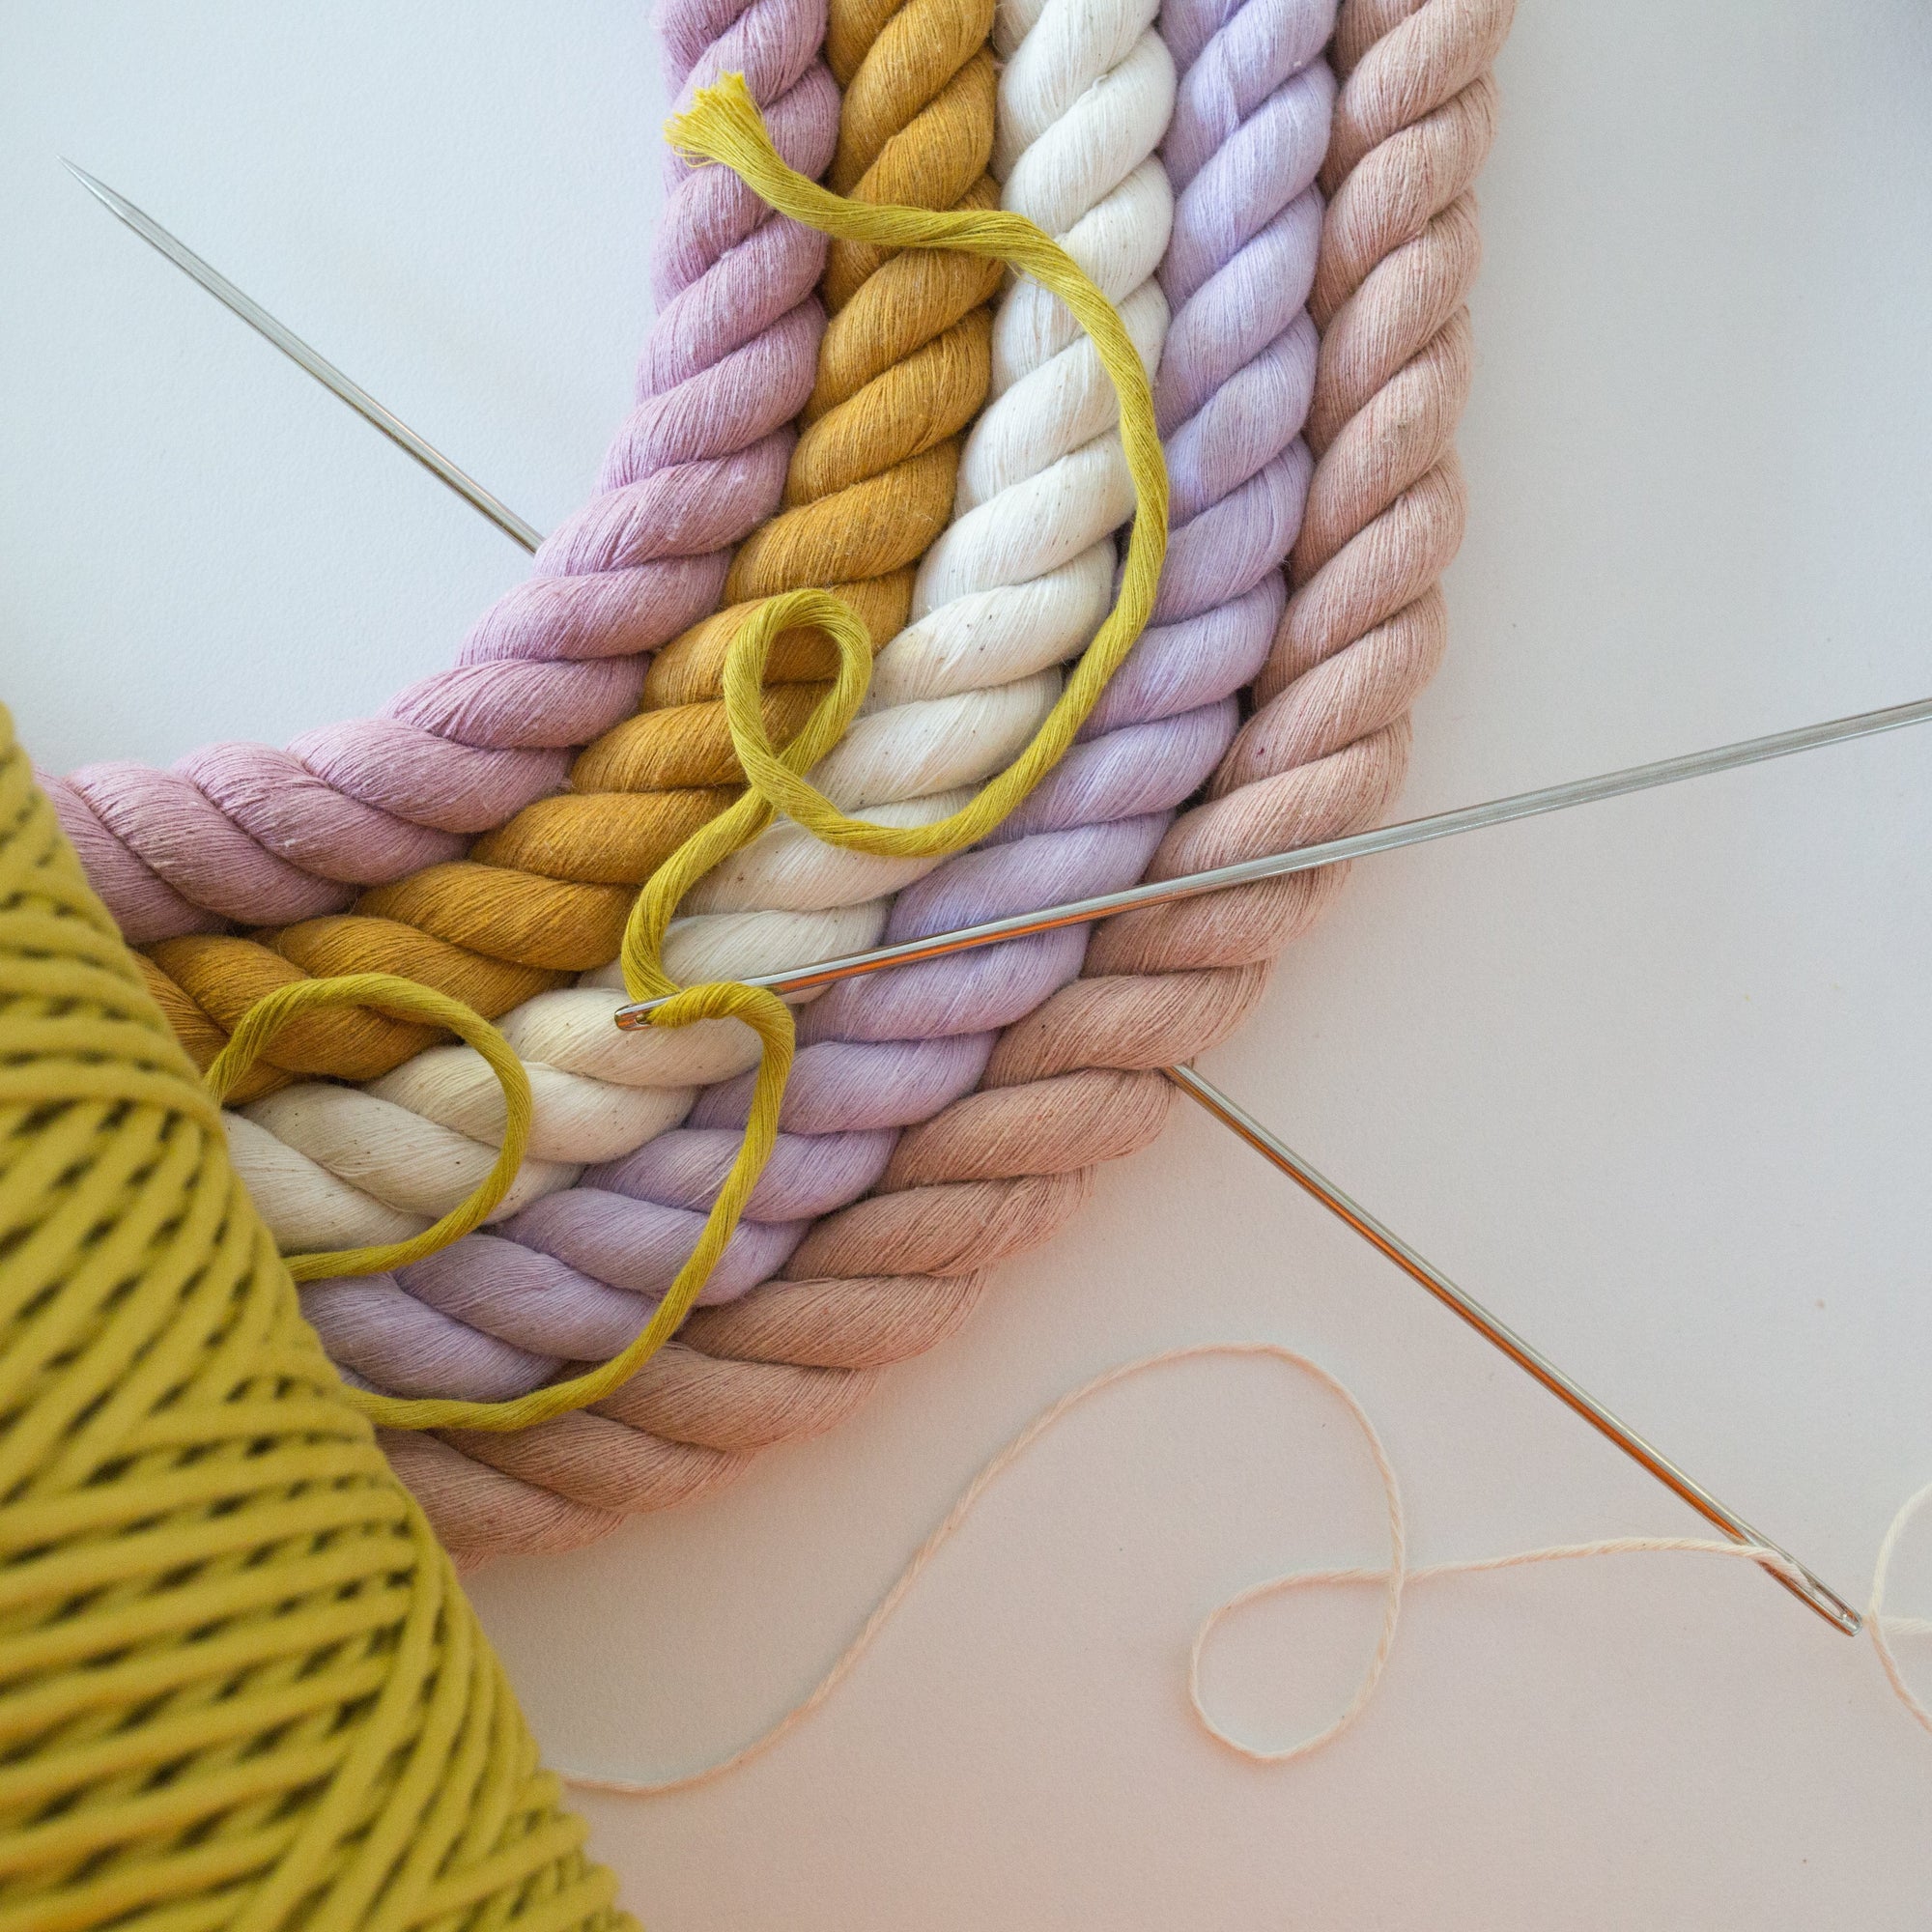 Warp Knitting 3 Macrame x Yarn Decorative Cotton 100 DYI m for mm Crafts  Home DIY Circular Knitting Needles Interchangeable Circular Knitting  Needles